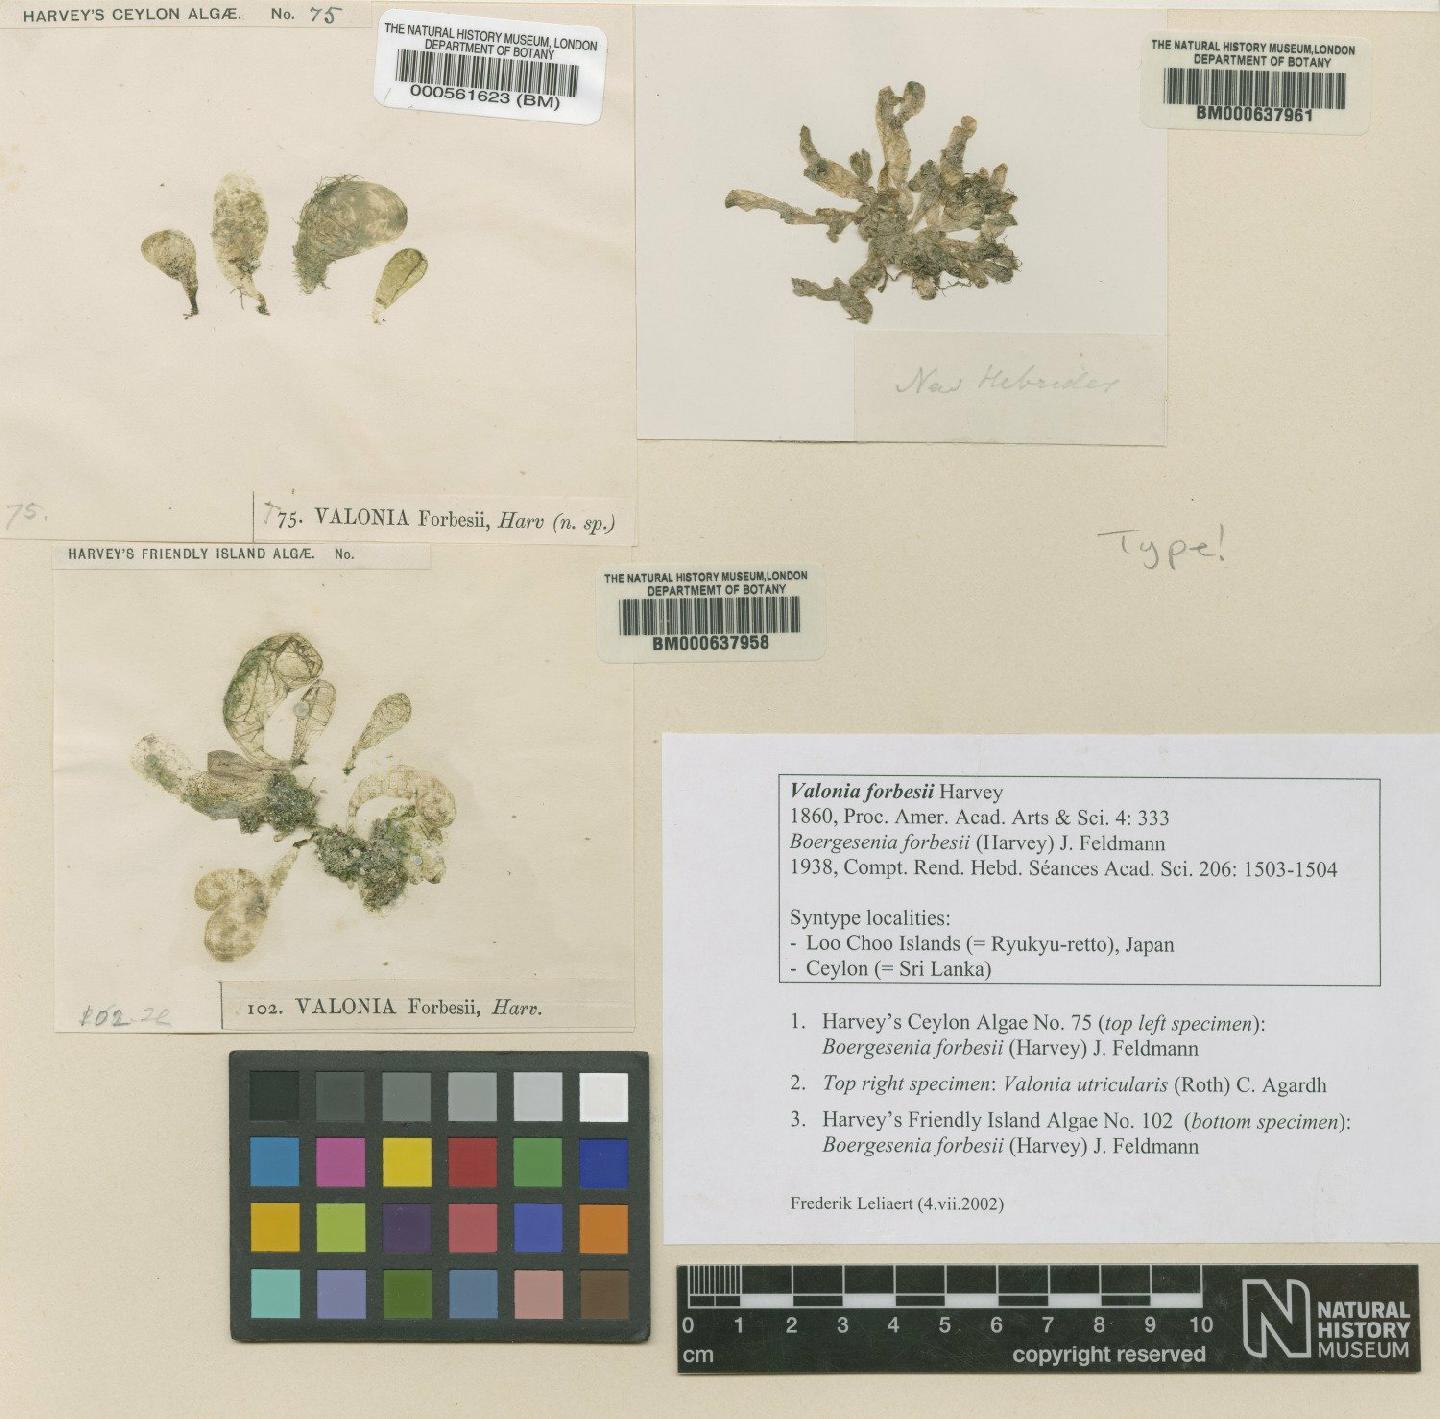 To NHMUK collection (Boergesenia forbesii (Harvey) Feldmann; Type; NHMUK:ecatalogue:4829827)